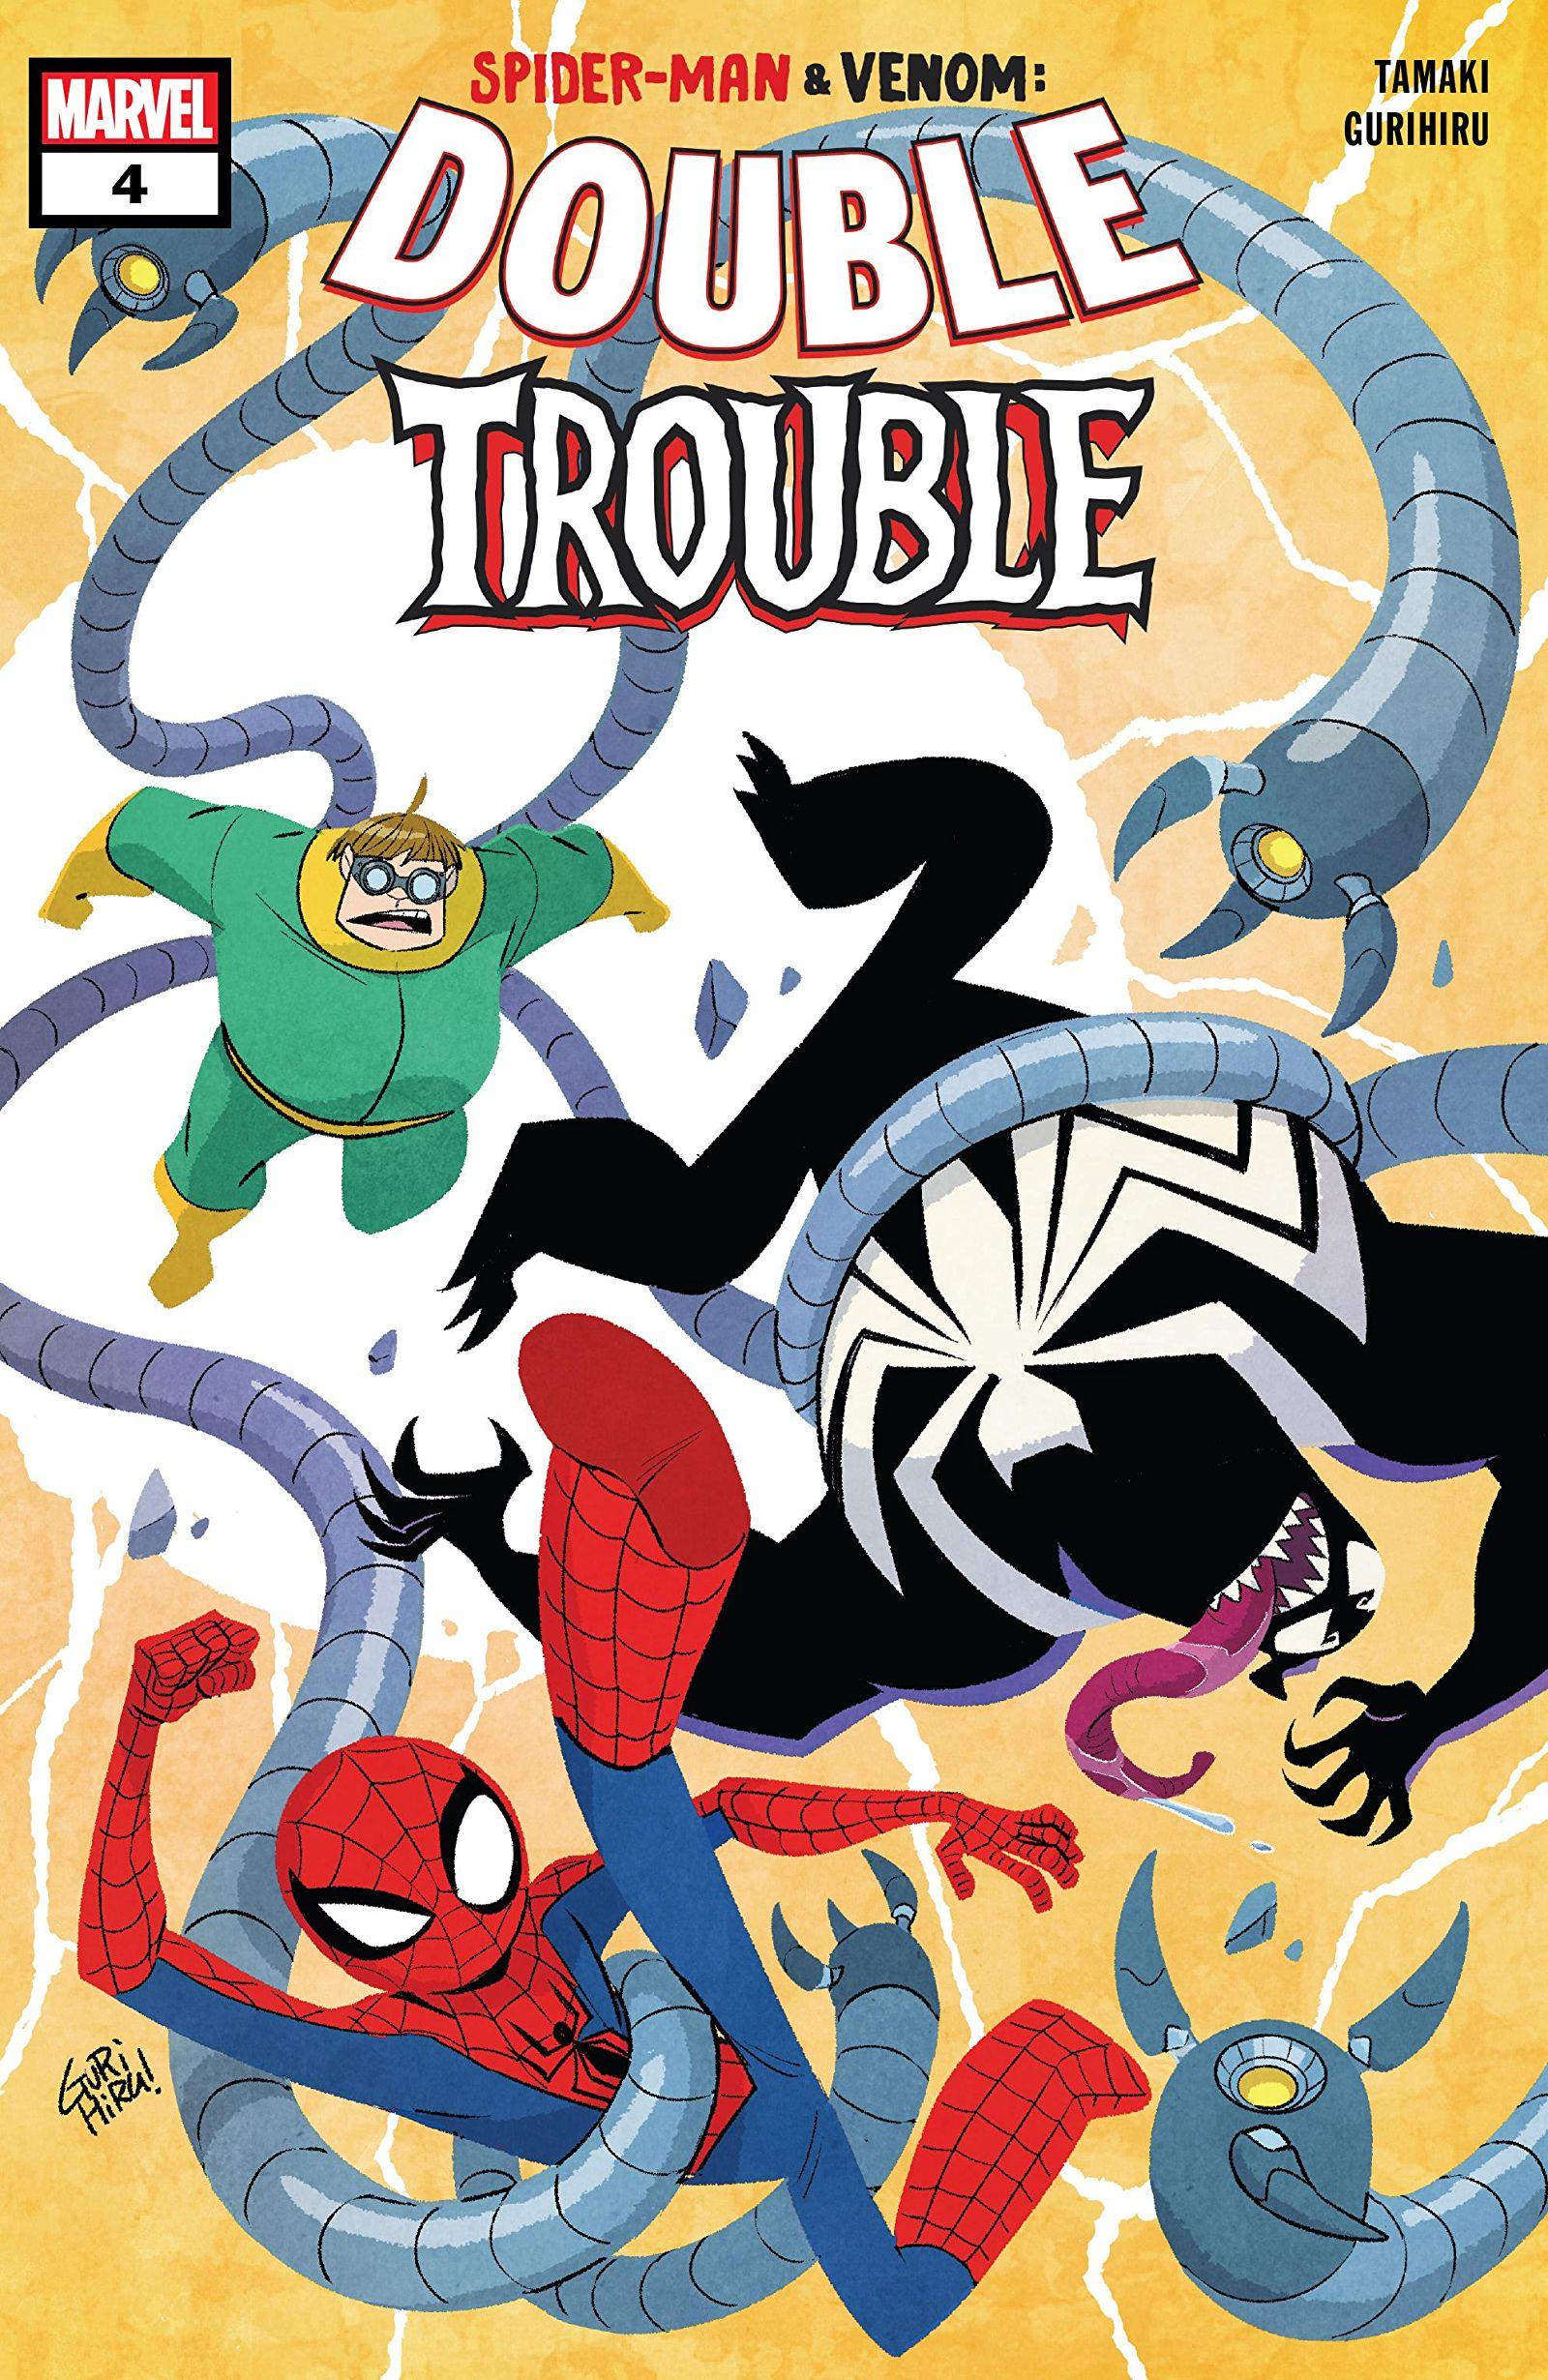 Spider-Man & Venom: Double Trouble Vol. 1 #4